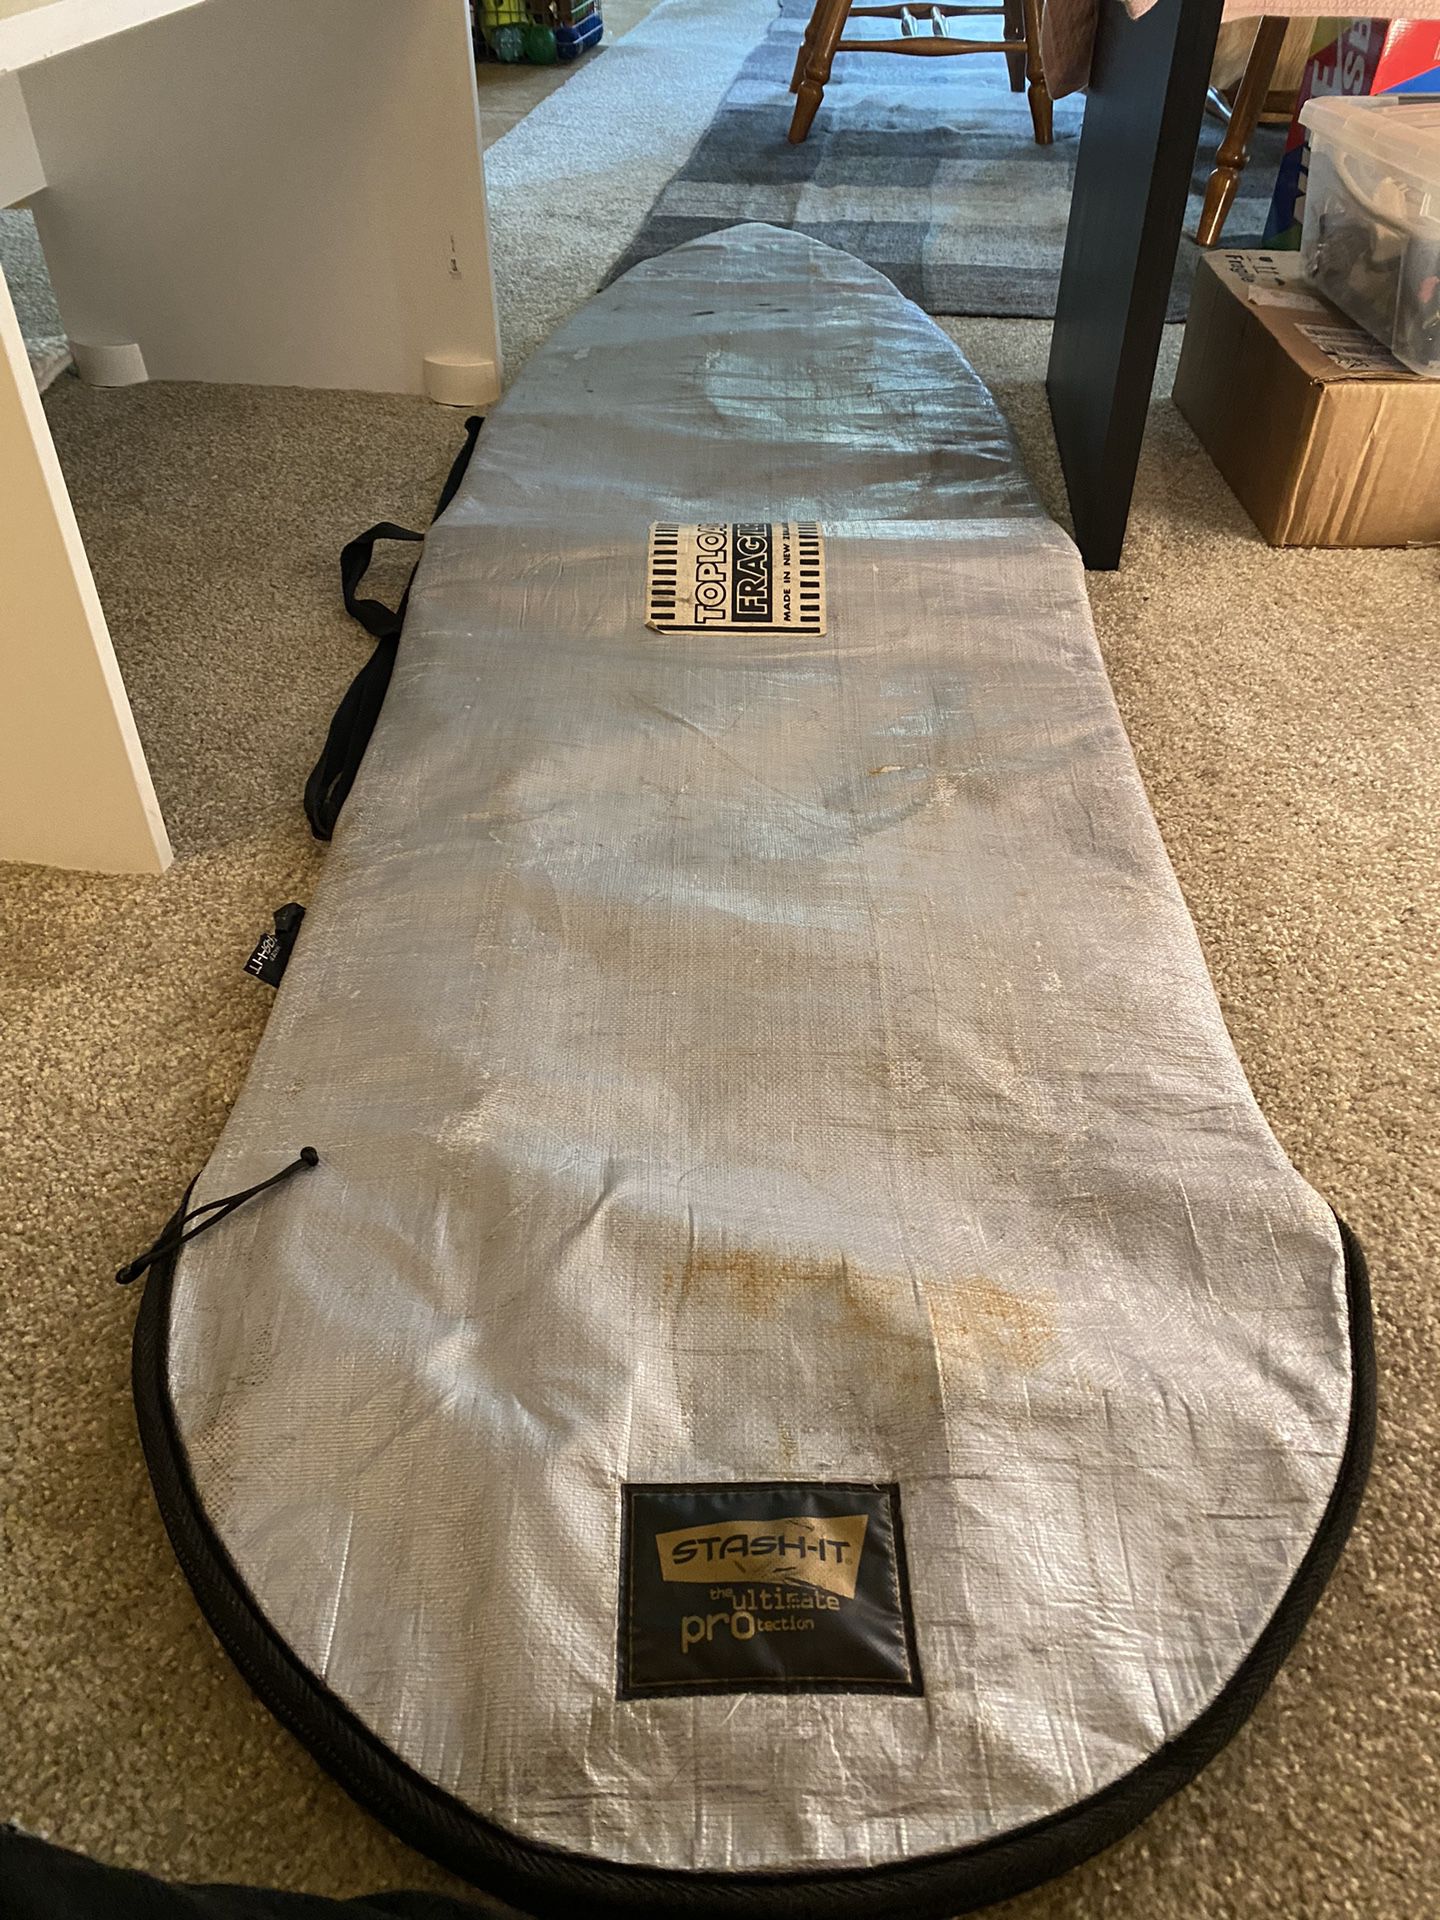 Stash-it Surfboard Travel Bag